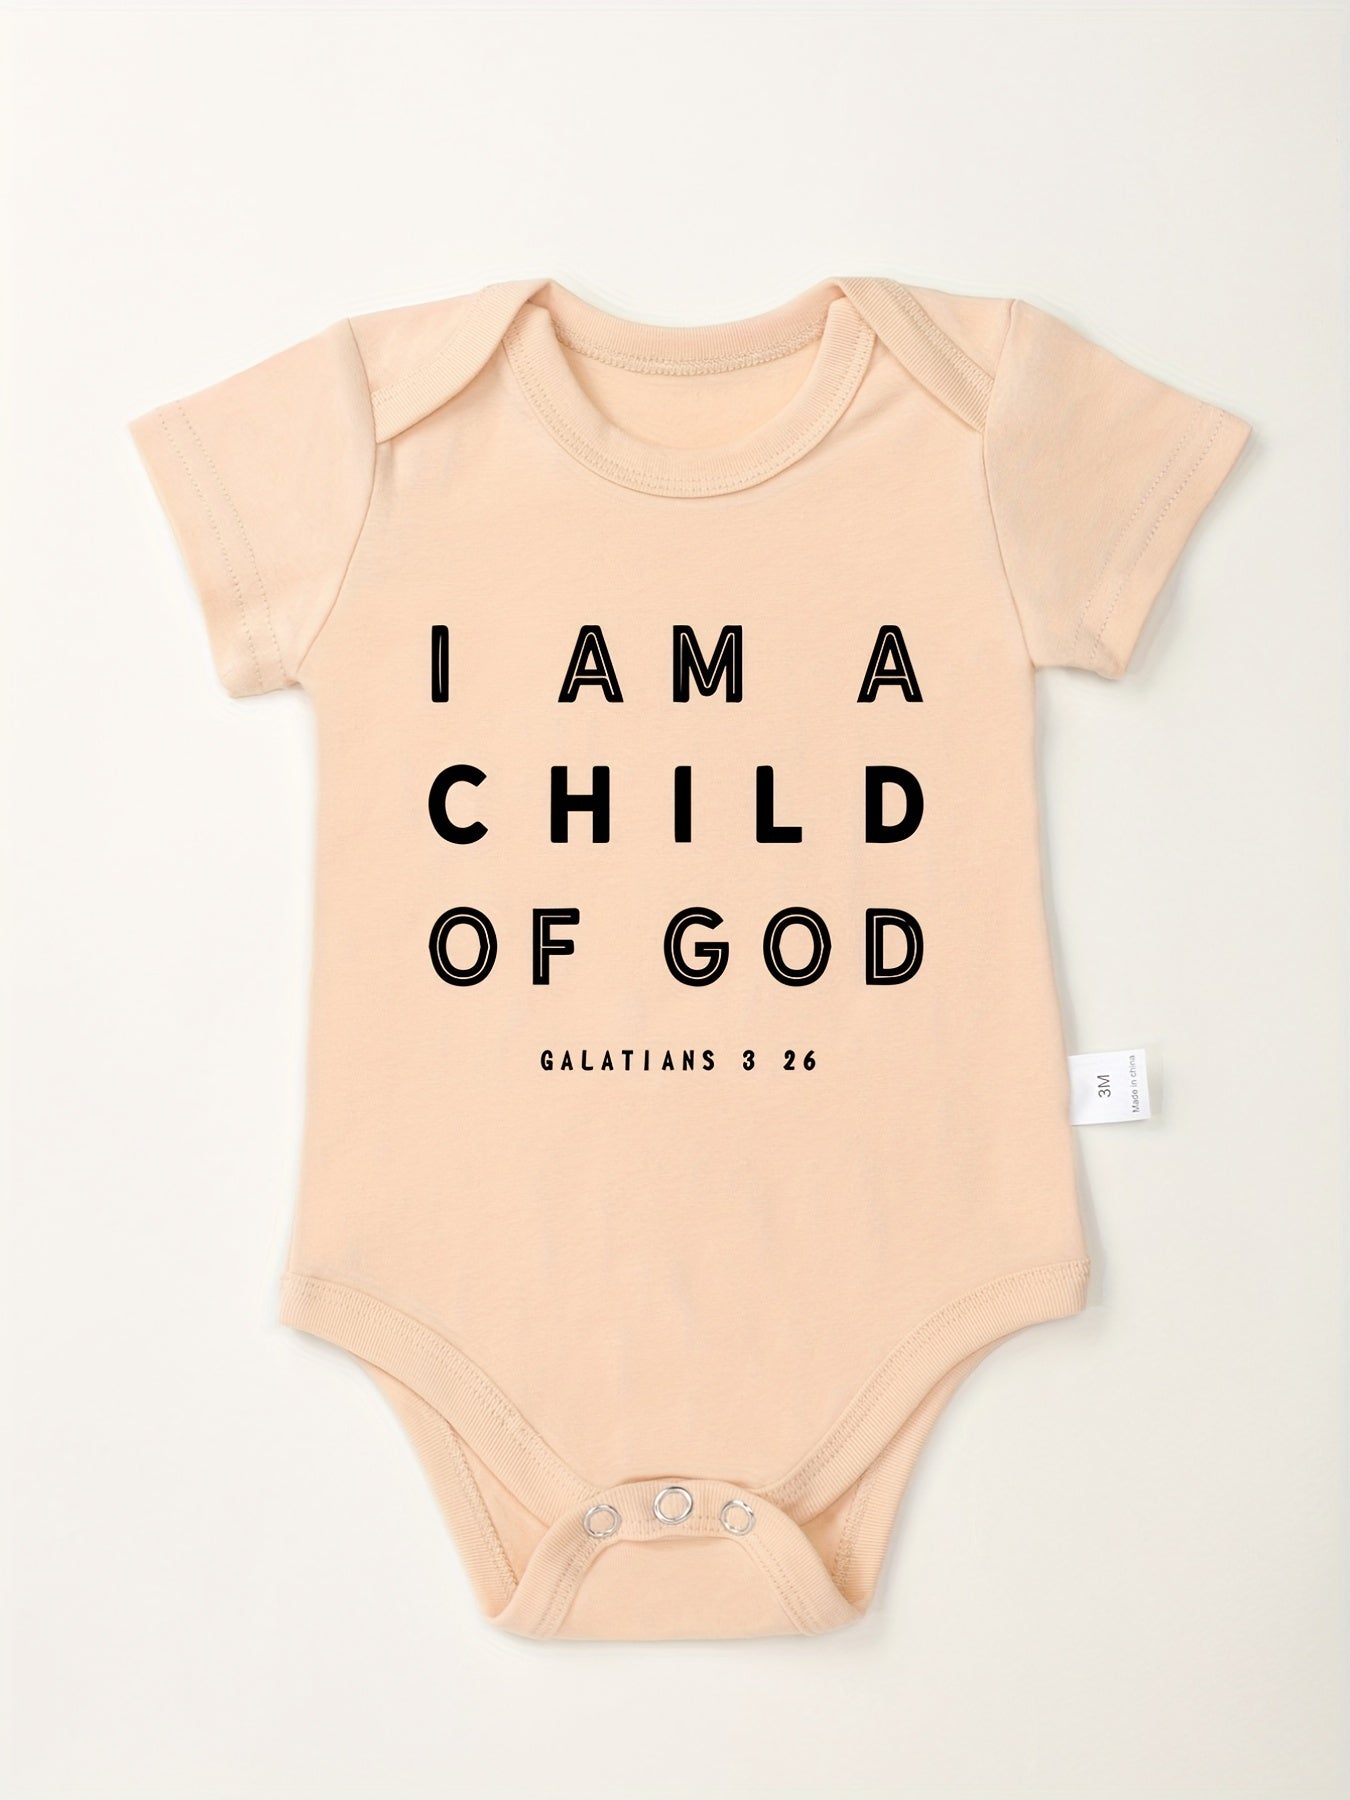 I Am A Child Of God Christian Baby Onesie claimedbygoddesigns